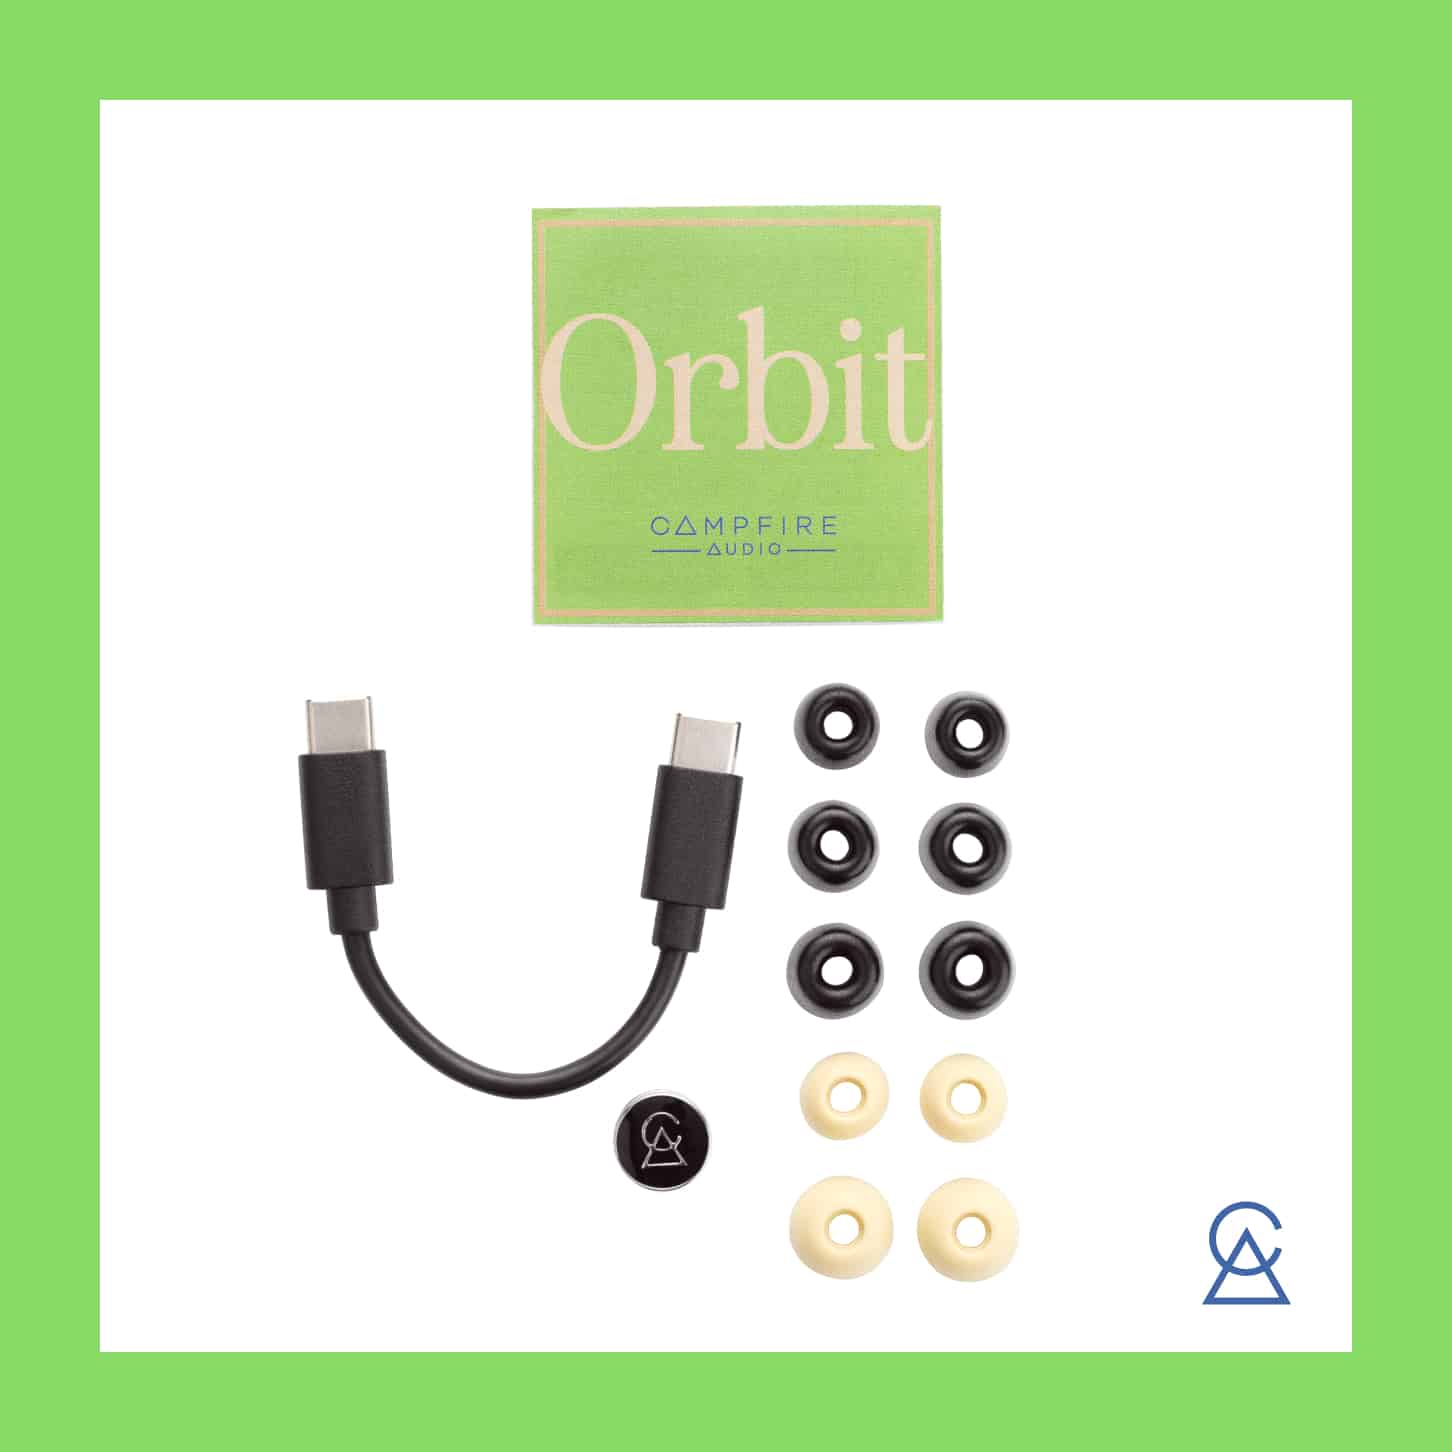 In-Box-Accessories-Orbit-by-Campfire-Audio